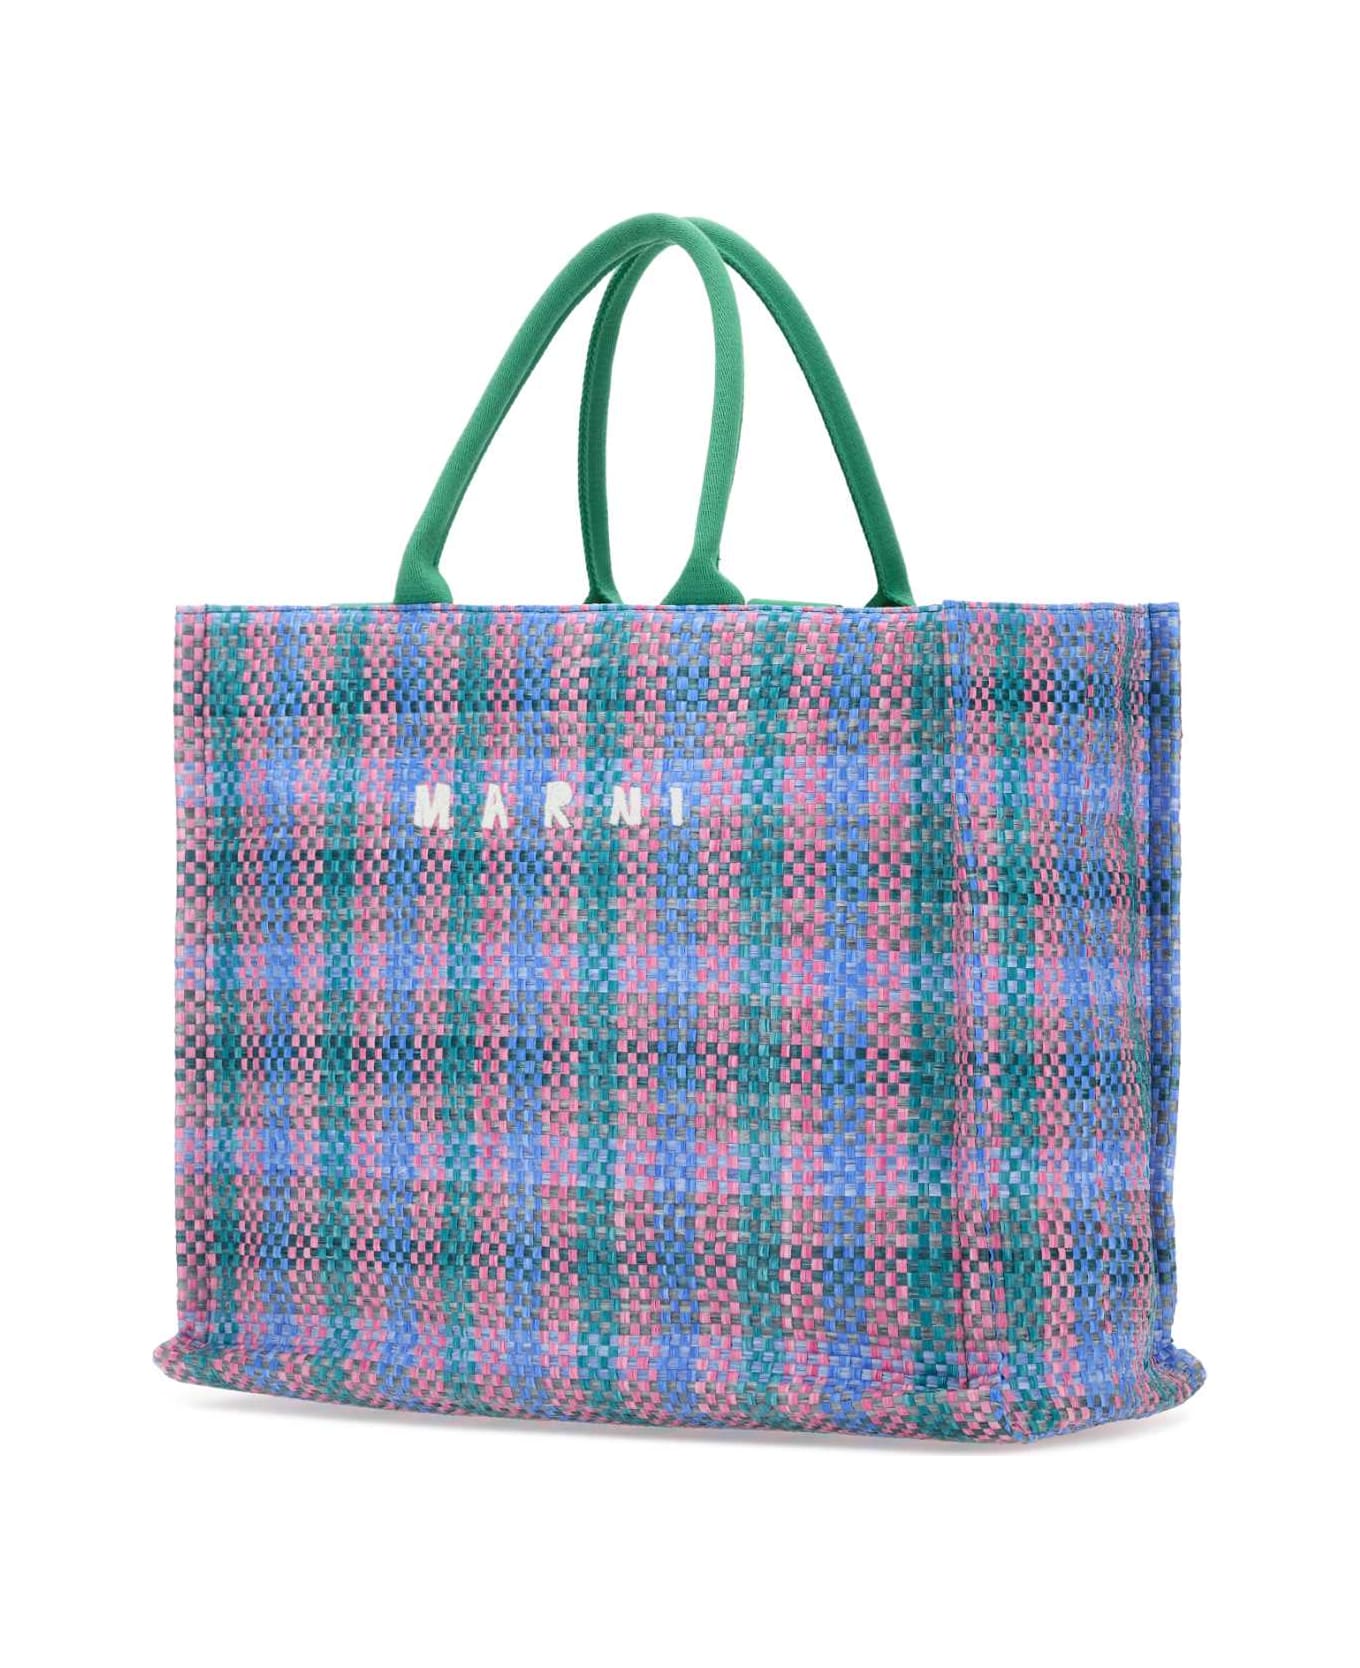 Marni Multicolor Raffia Big Shopping Bag - GREENFUCHSIACYPRESS トートバッグ